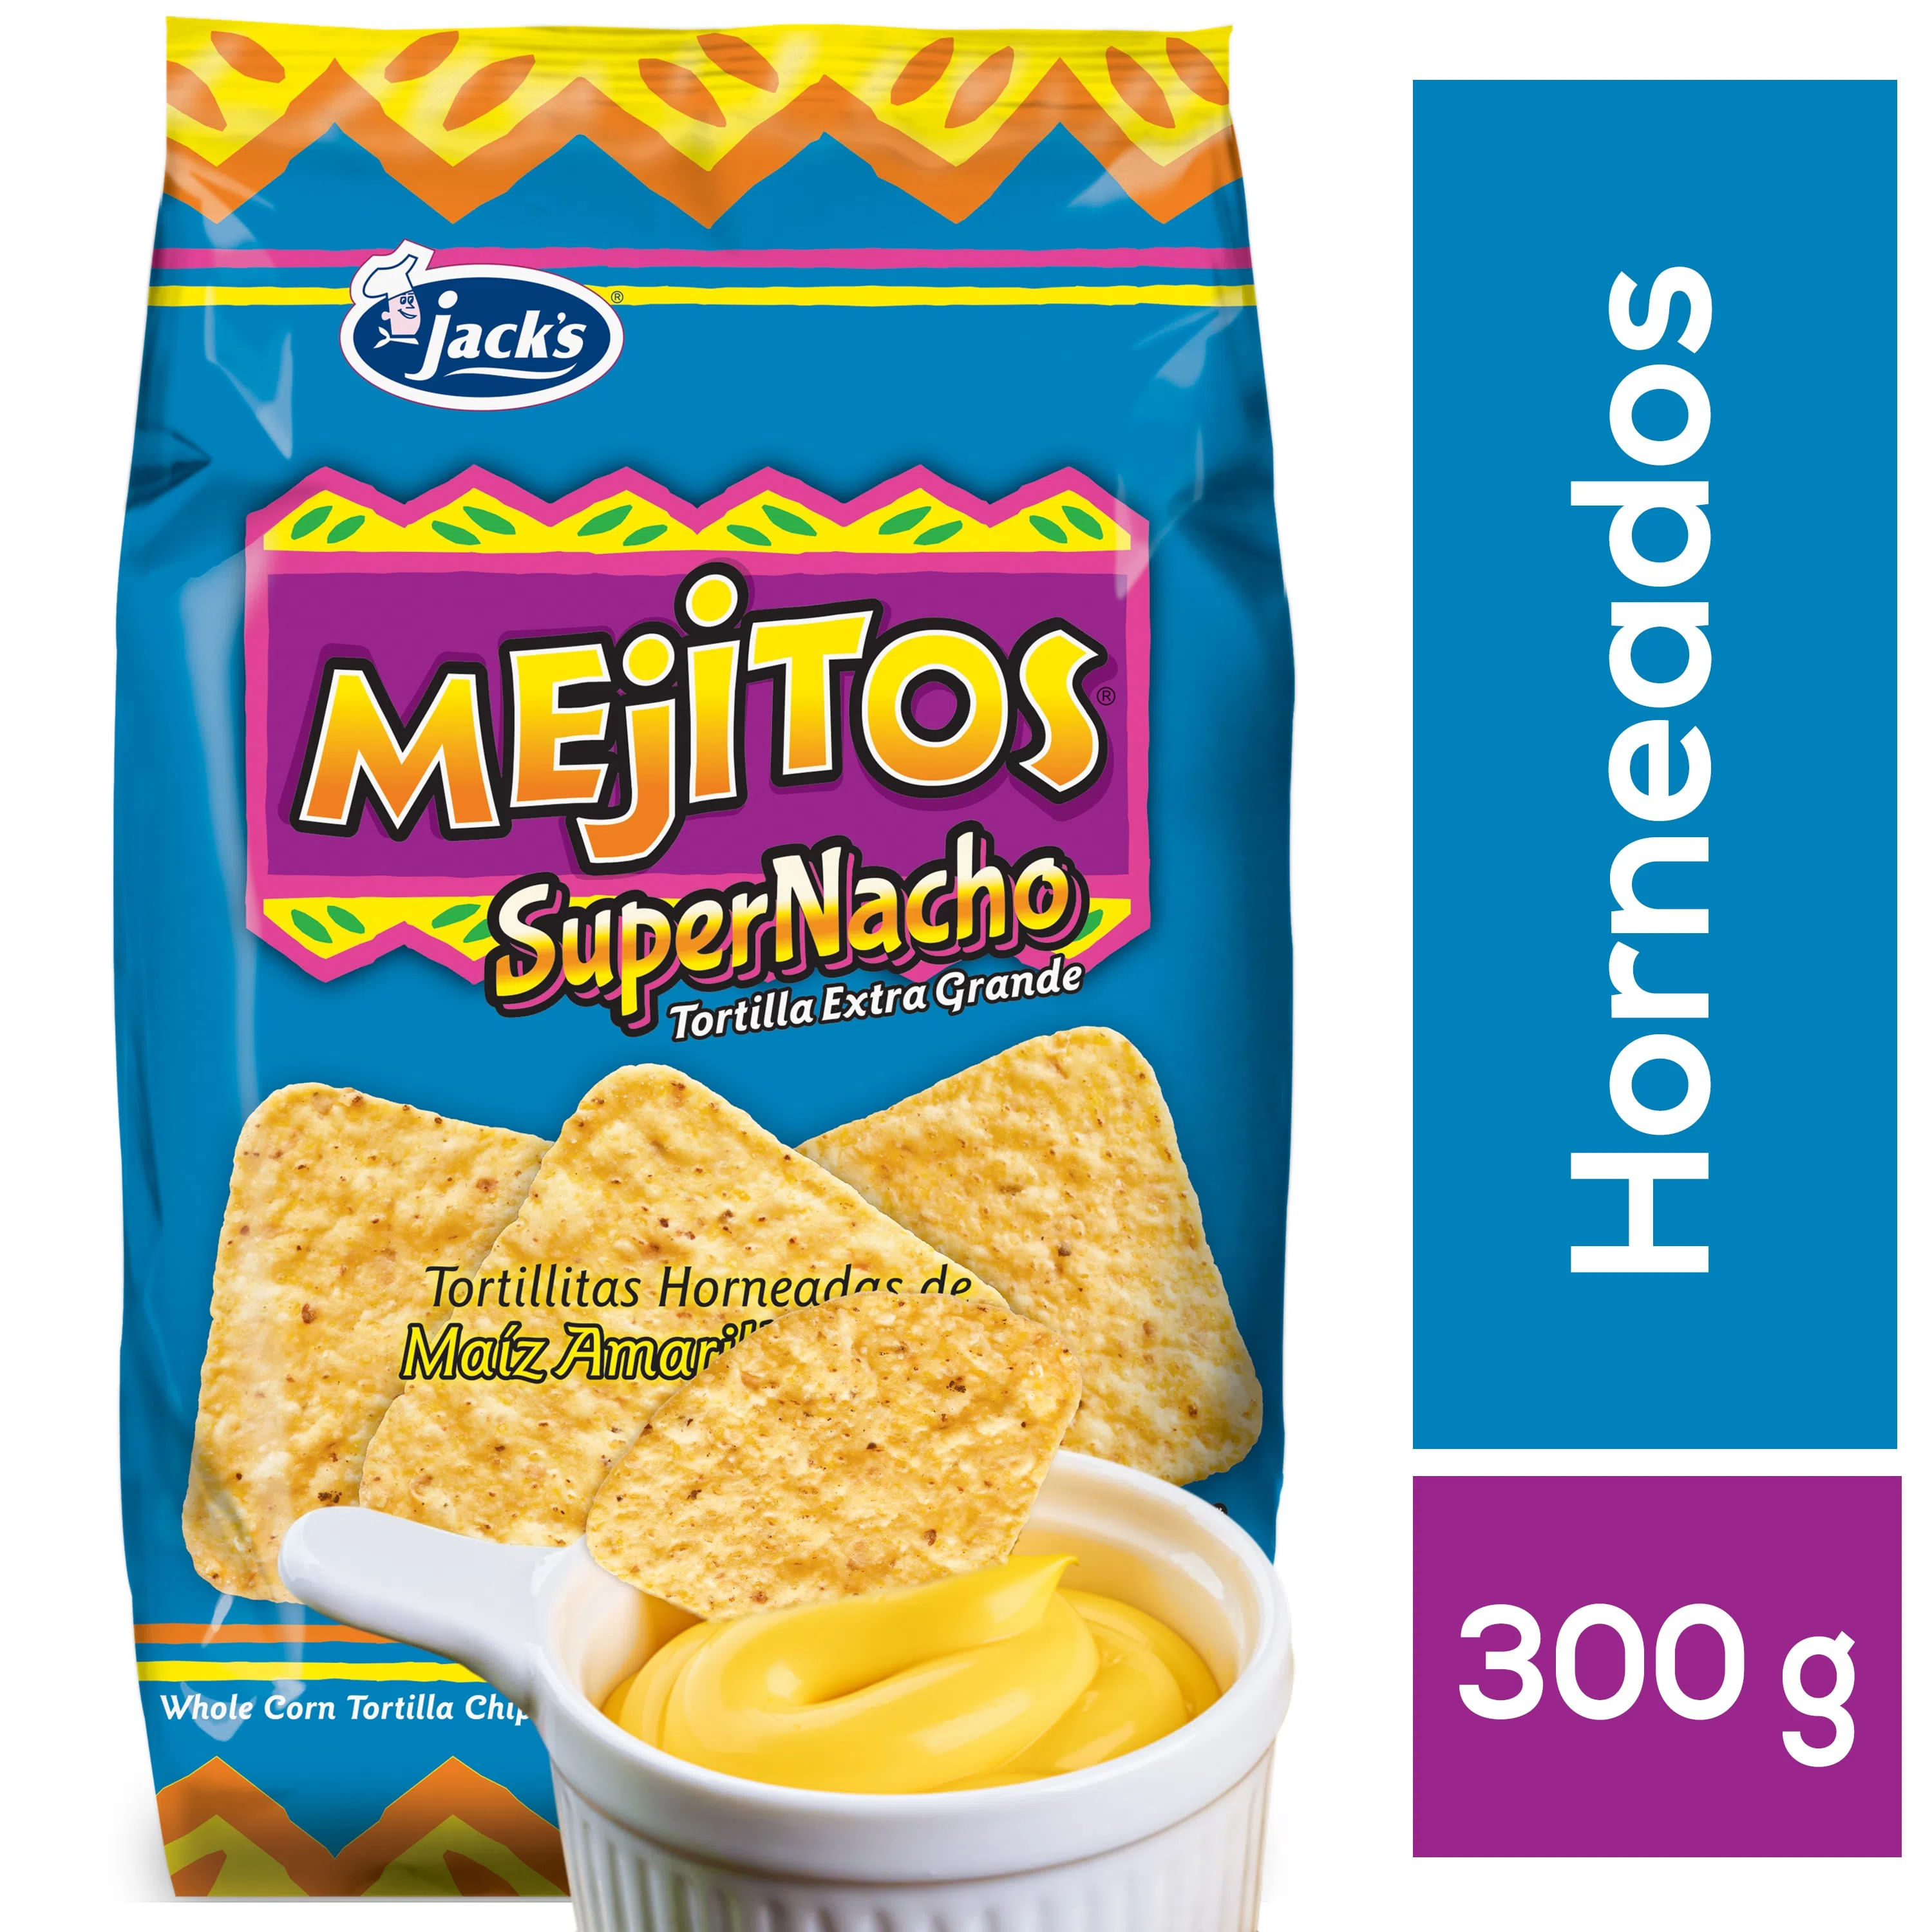 Snack-Mejitos-Tortillas-Tostadas-Super-Nacho-Jack-S-300Gr-1-27535